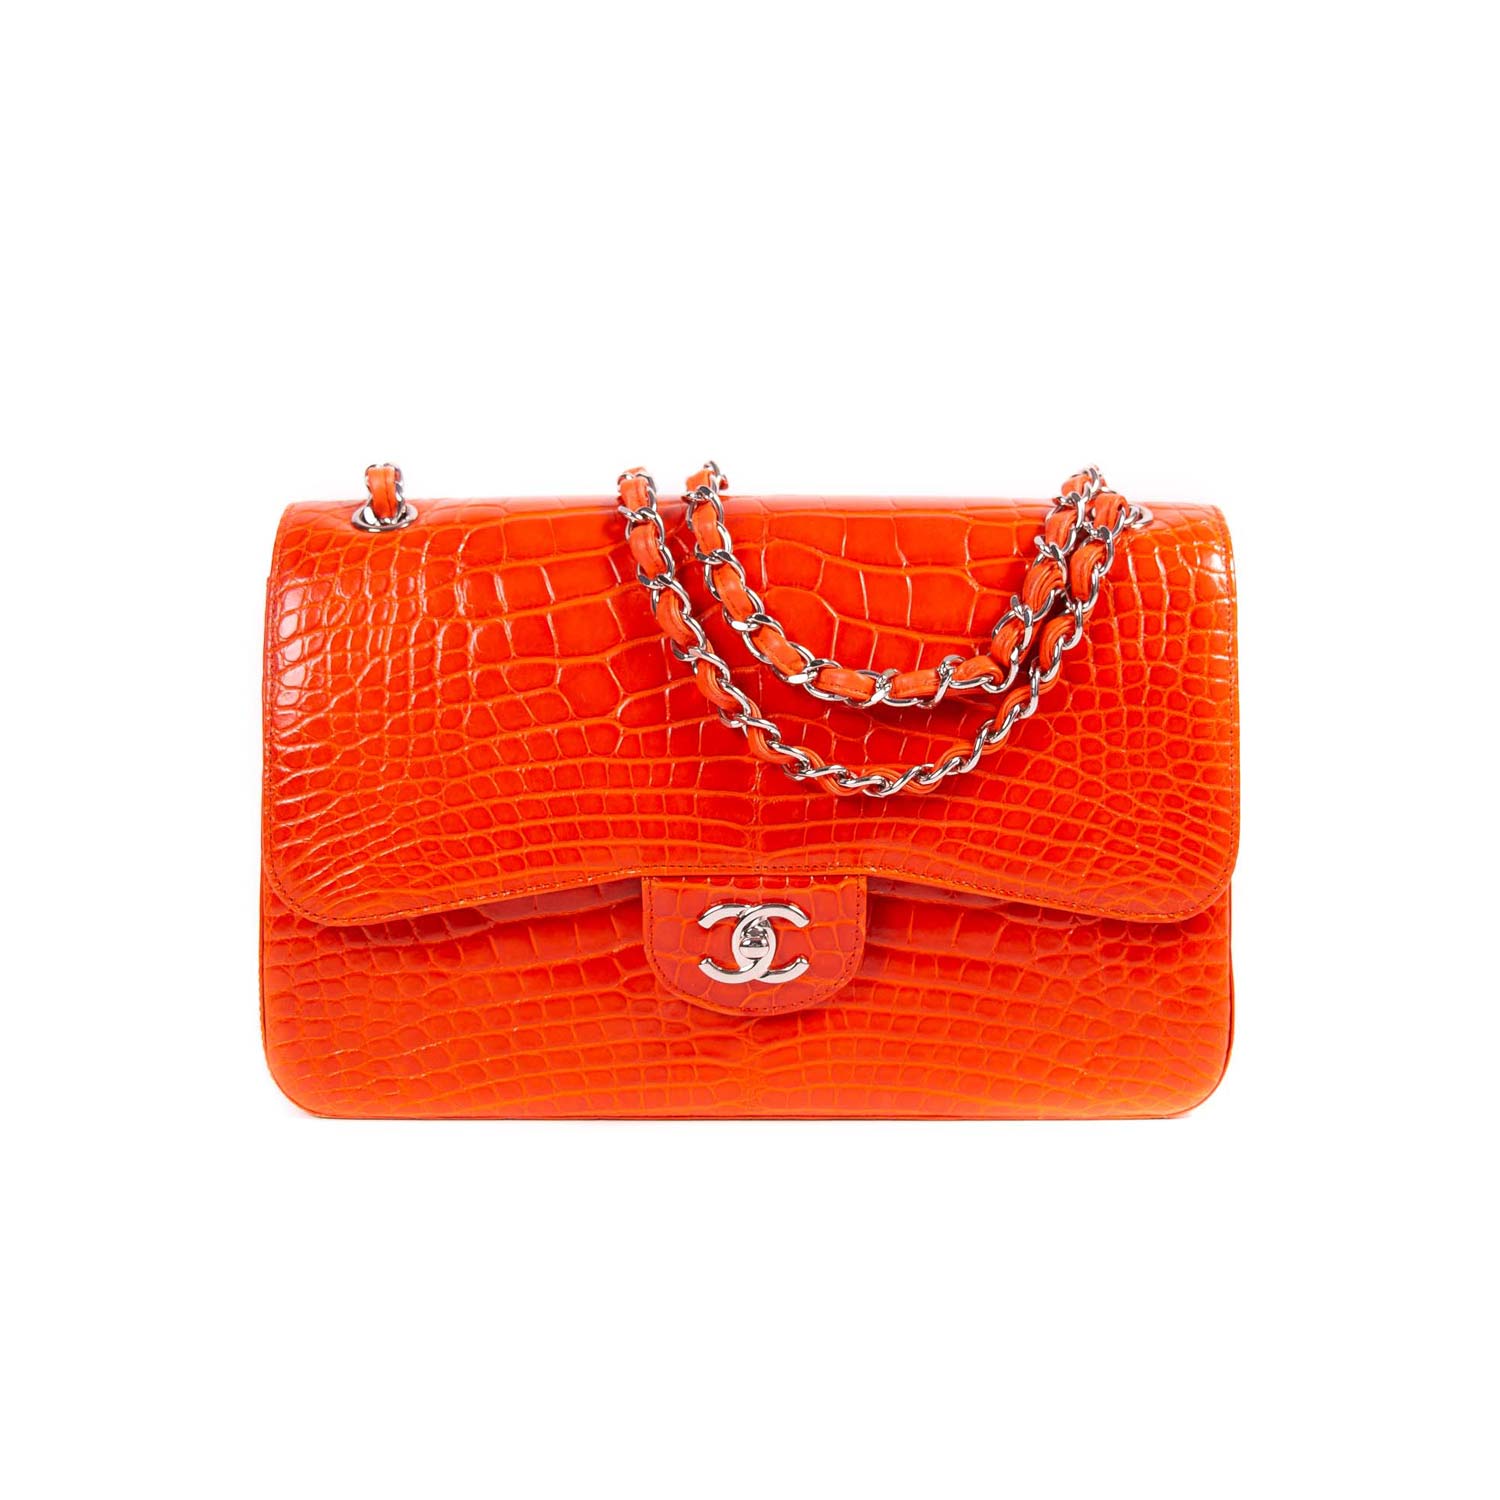 Shop authentic Chanel Classic Crocodile Jumbo Double Flap Bag at